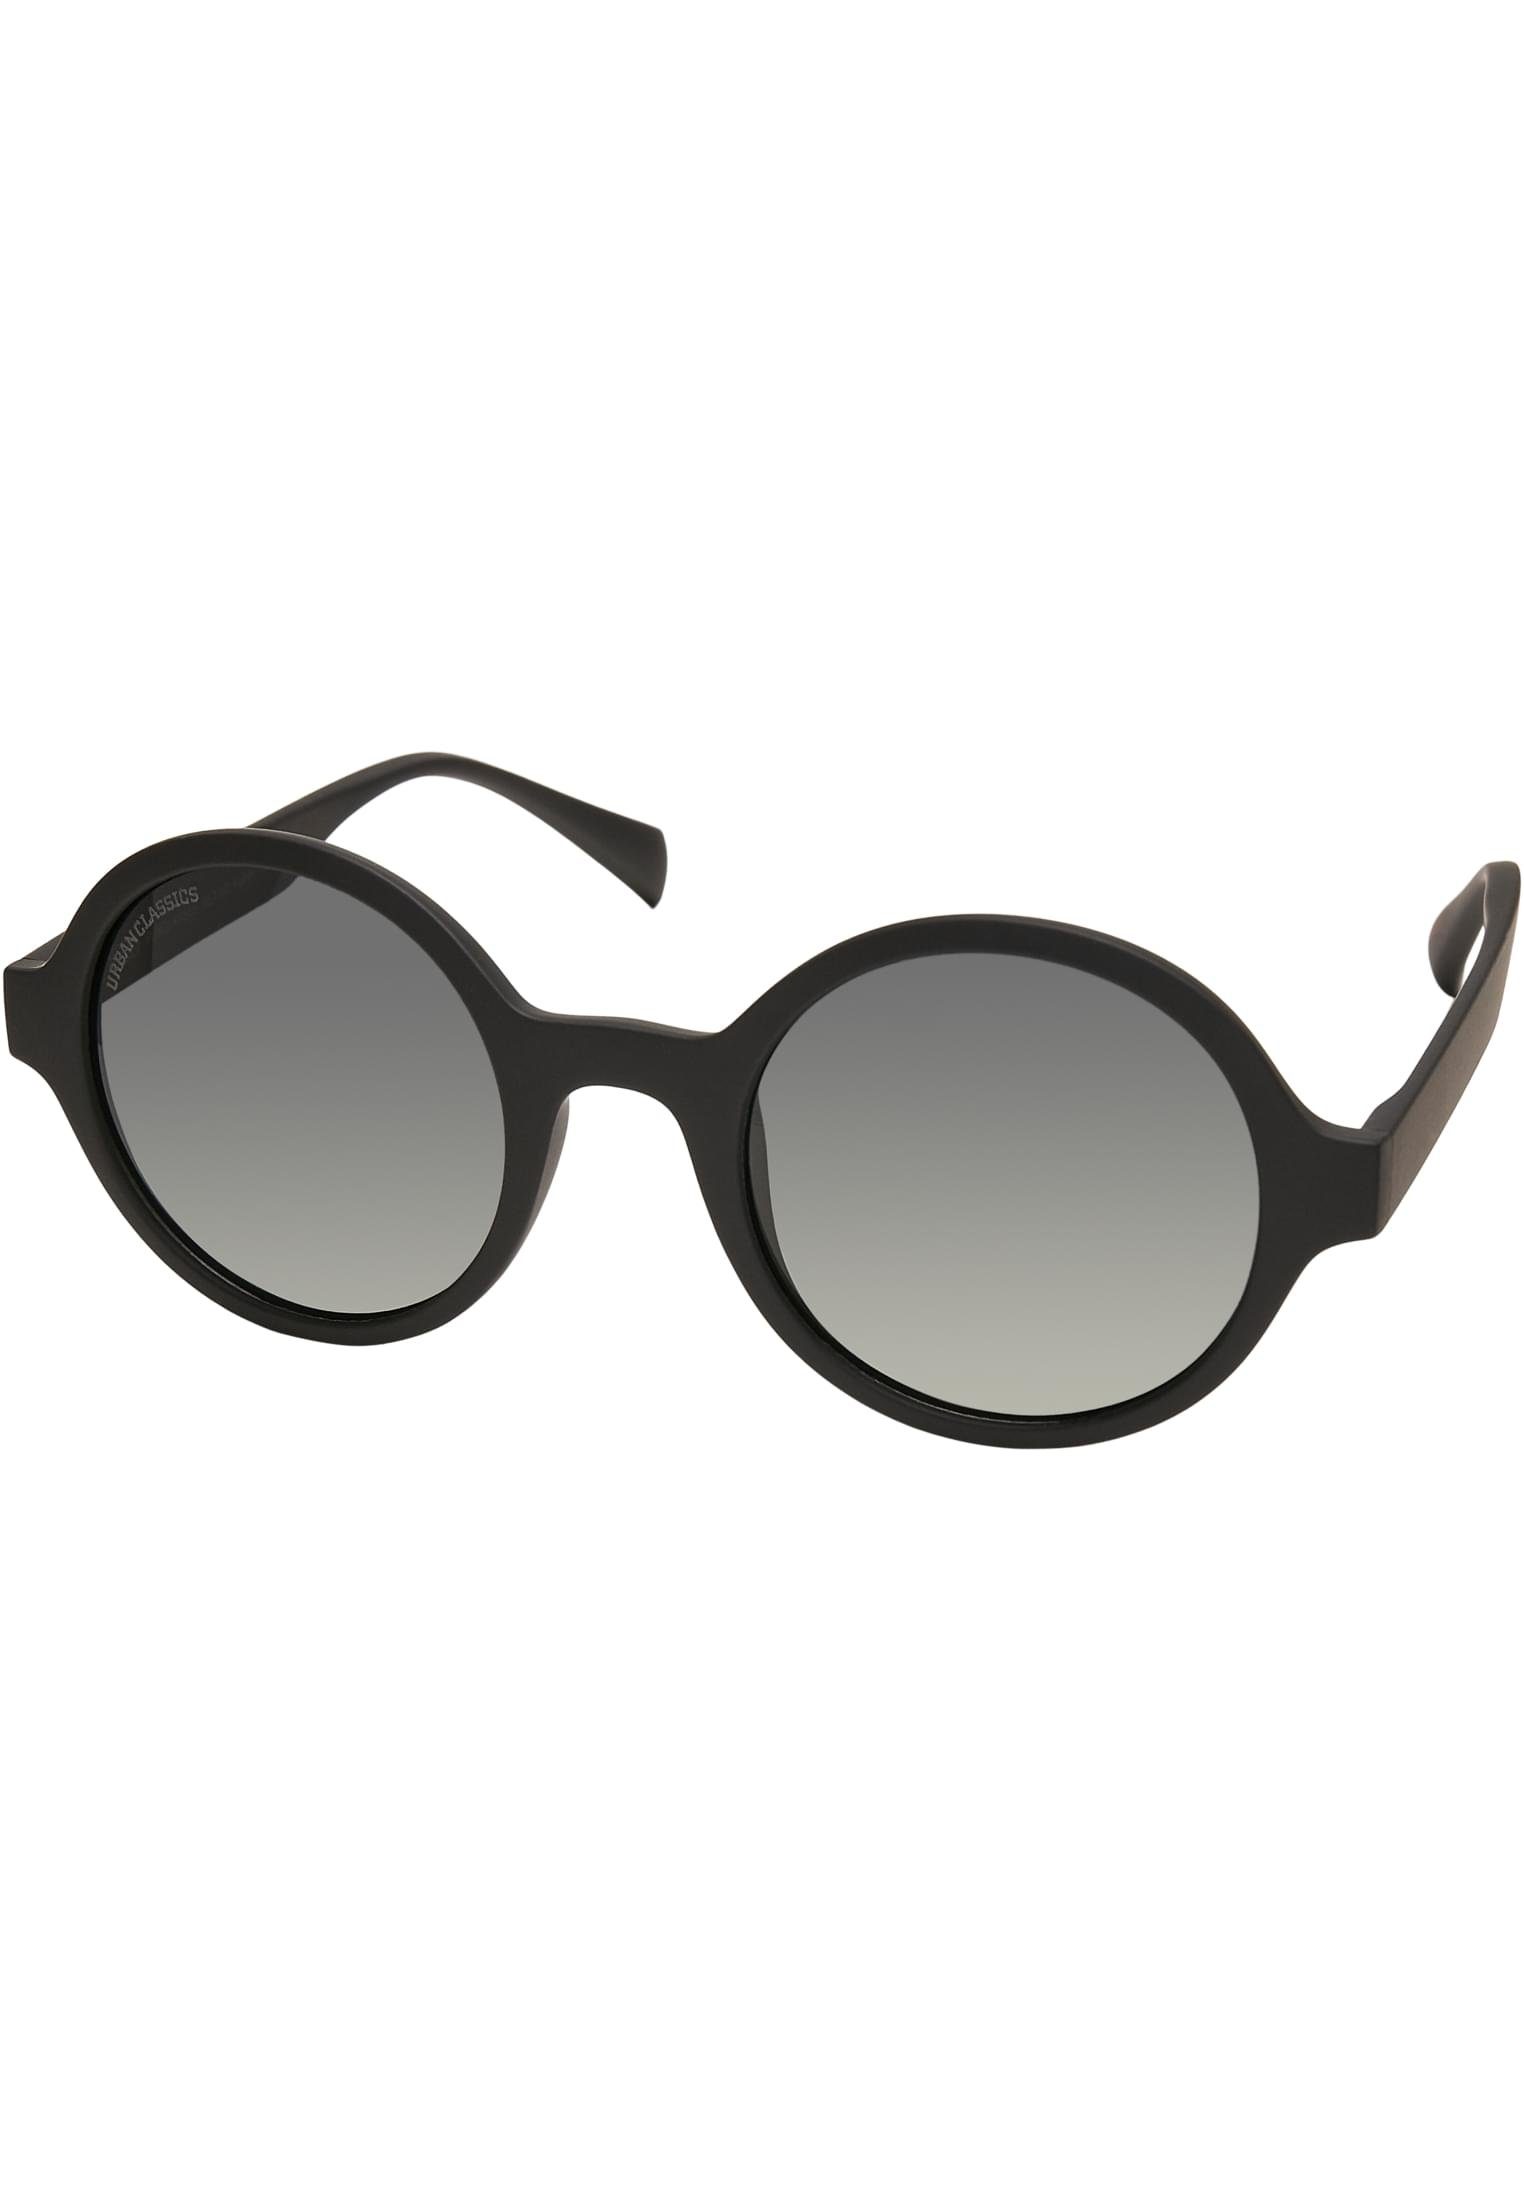 black/green Sonnenbrille CLASSICS Sunglasses UC URBAN Retro Funk Accessoires